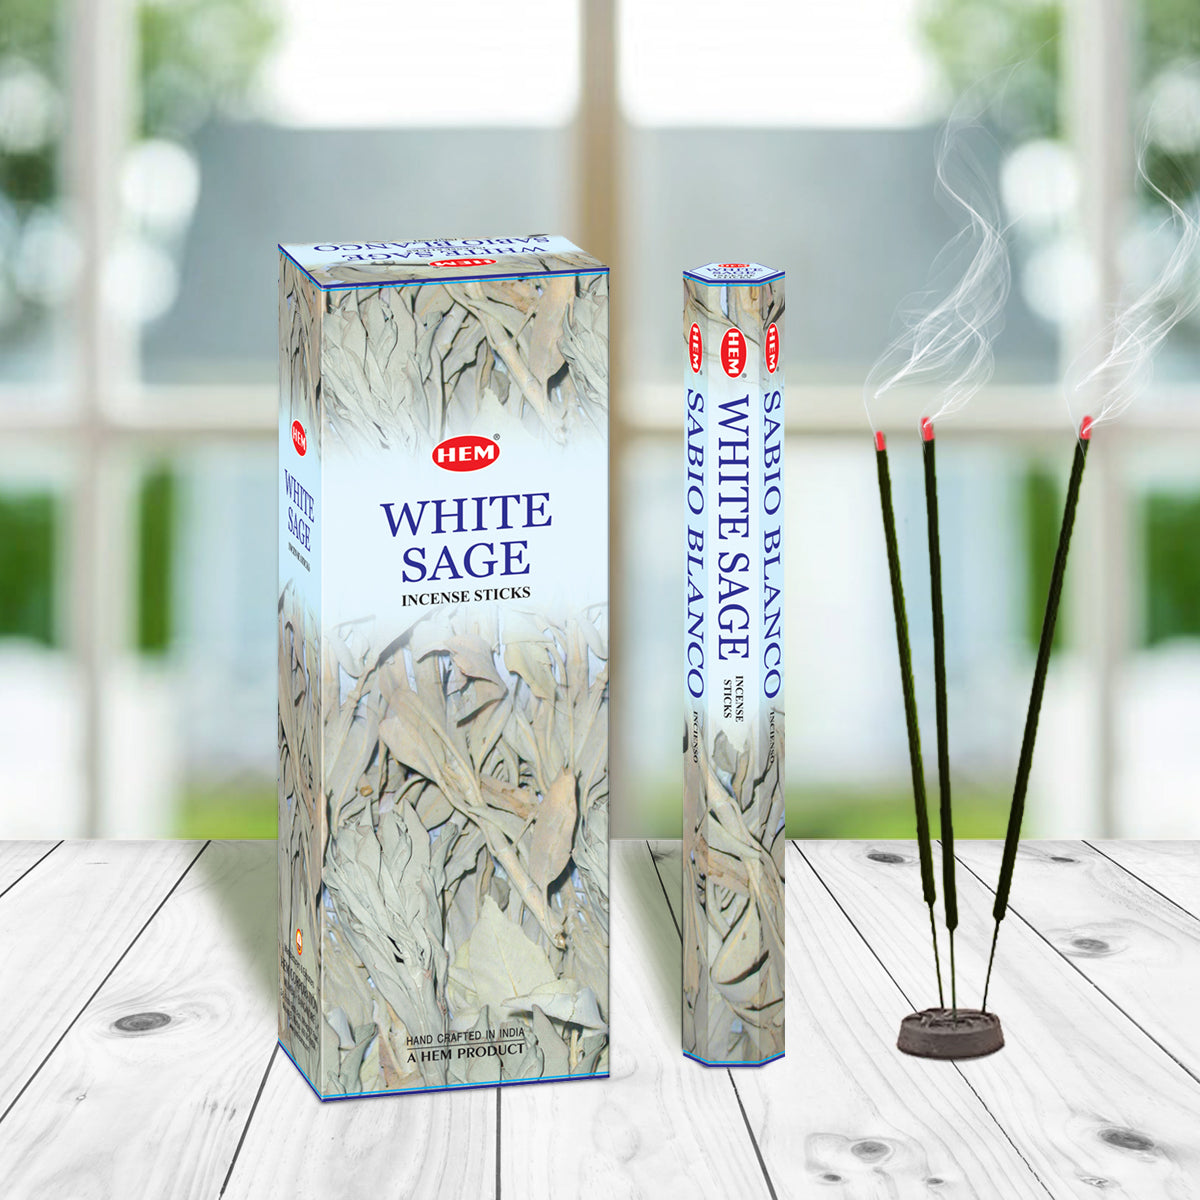  Hem White Sage Tubes Incense, 20g, Box of Six